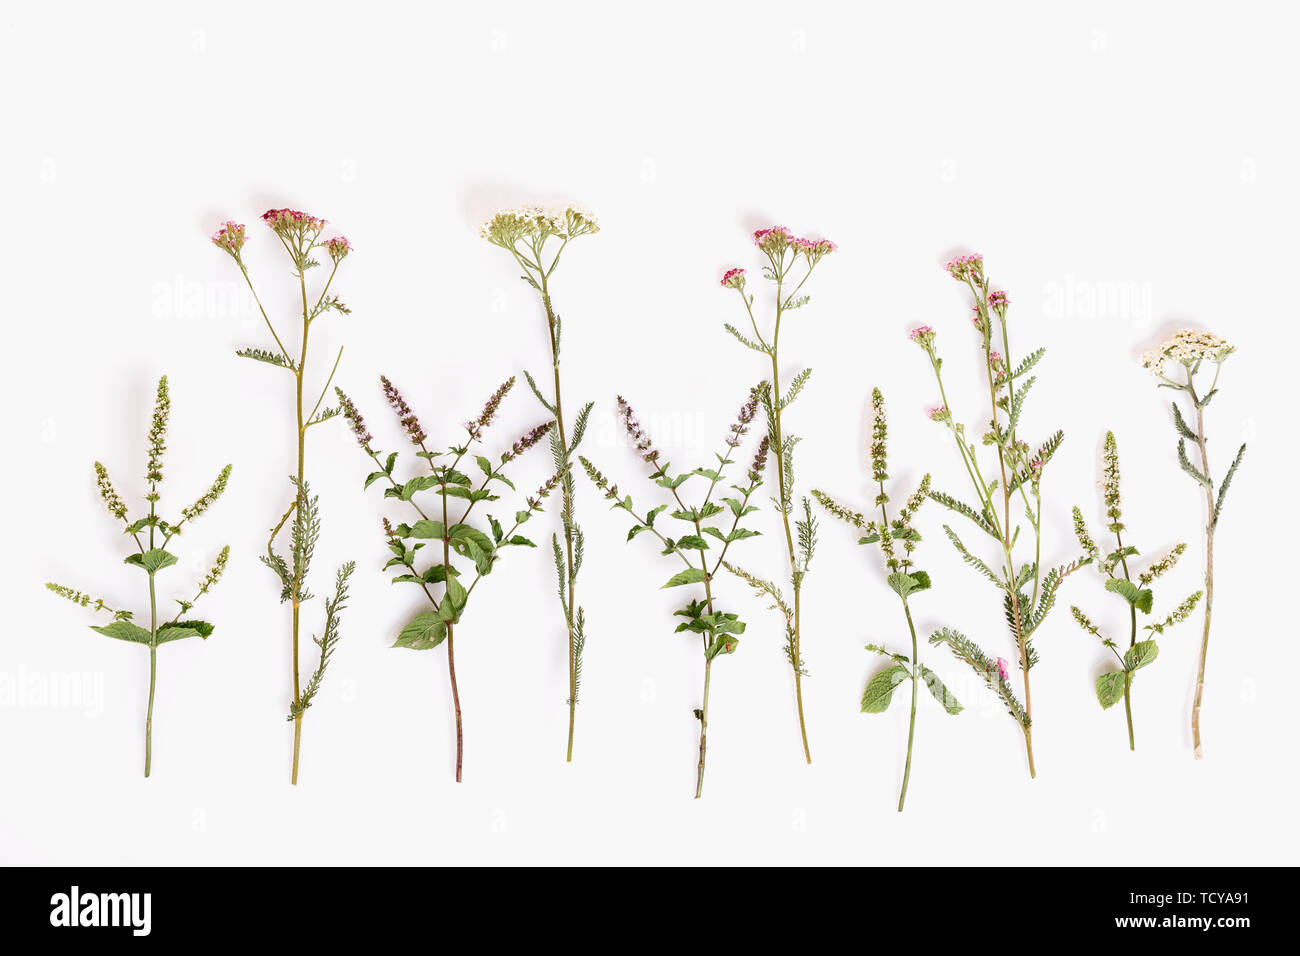 Blooming Achillea millefolium common names: yarrow or common yarrow isolated on white background Stock Photo